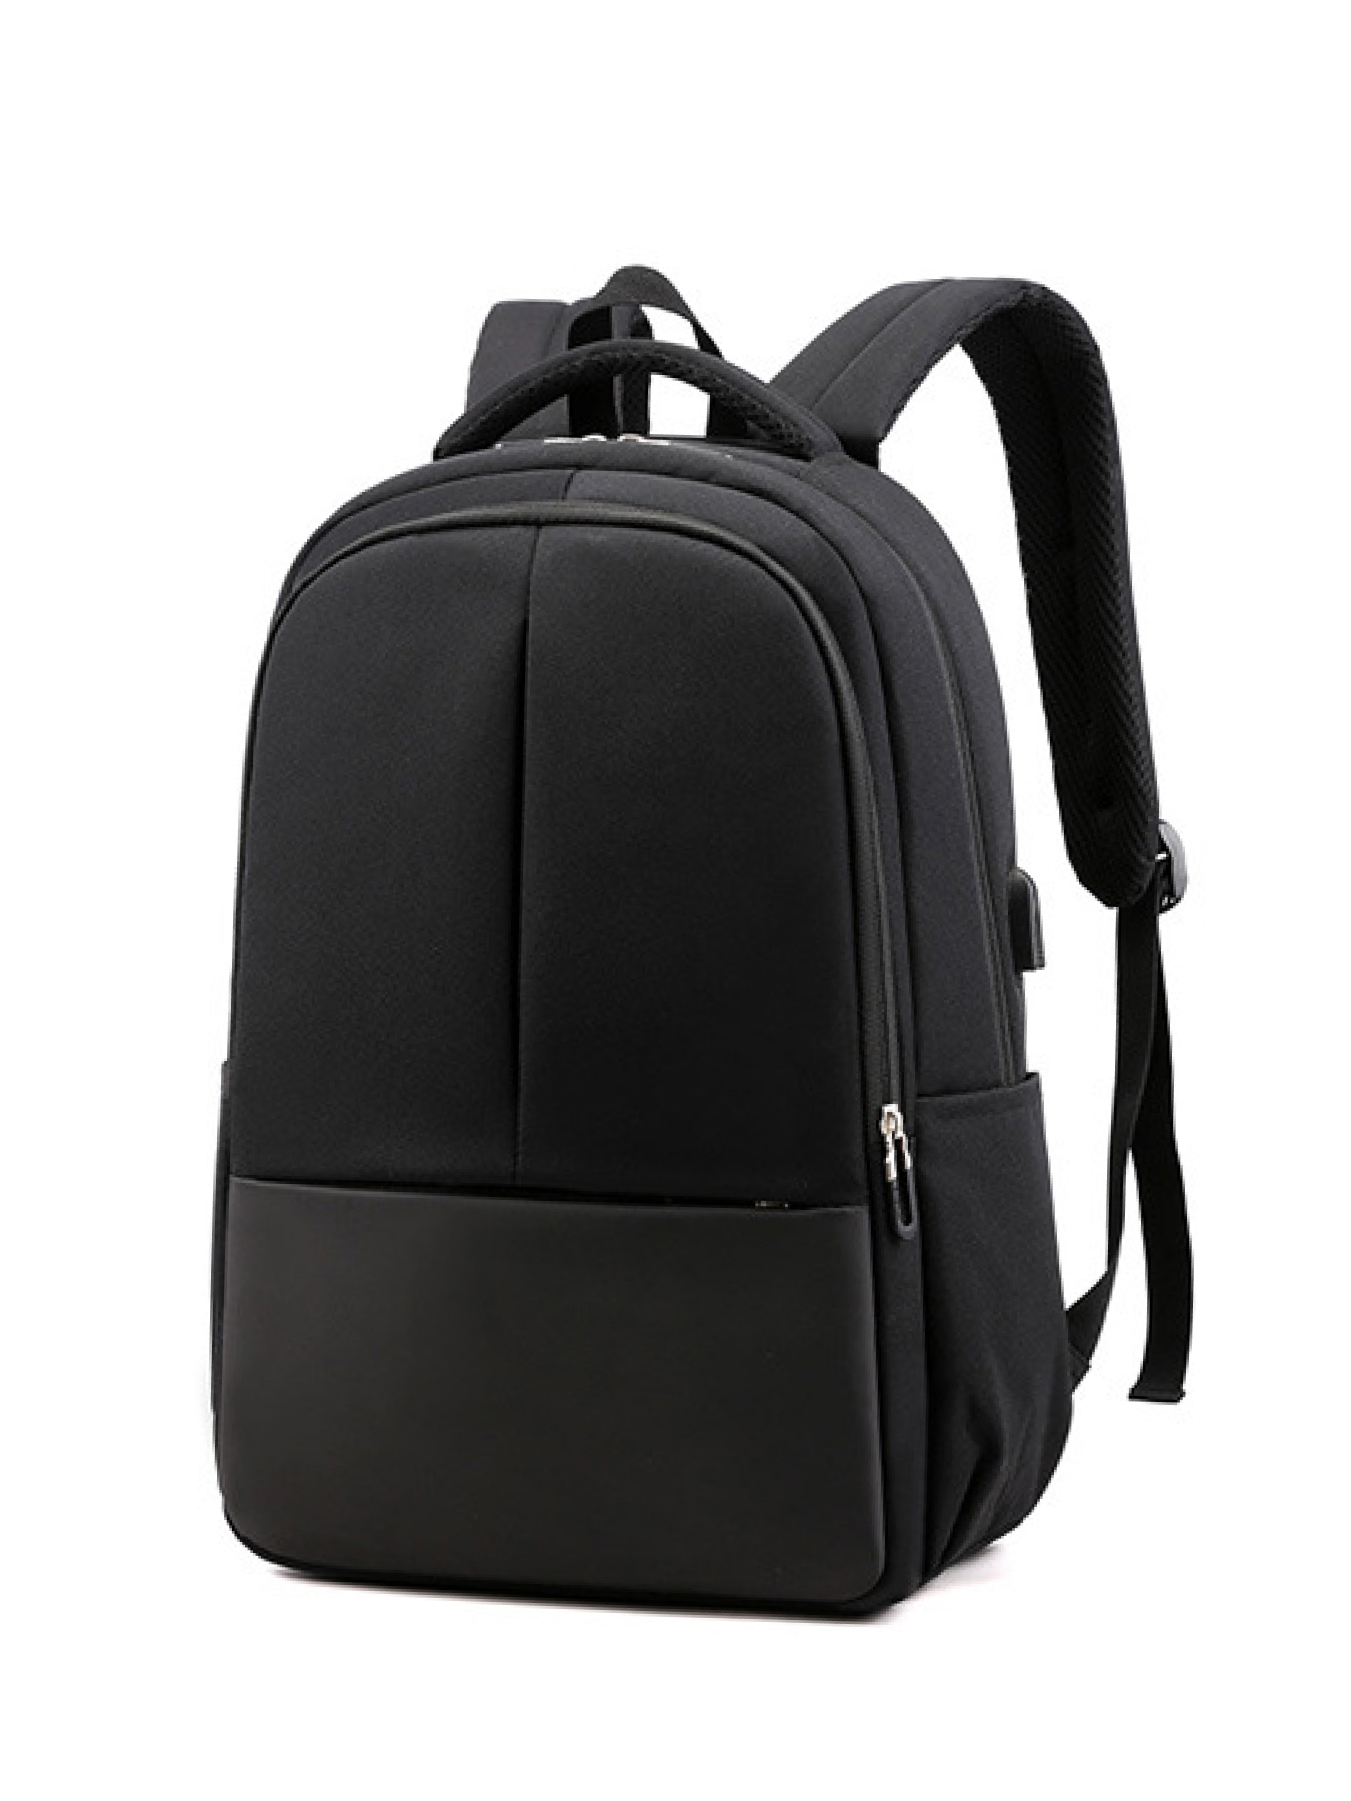 Рюкзак мужской Luxman 521 черный, 43х28х16 см